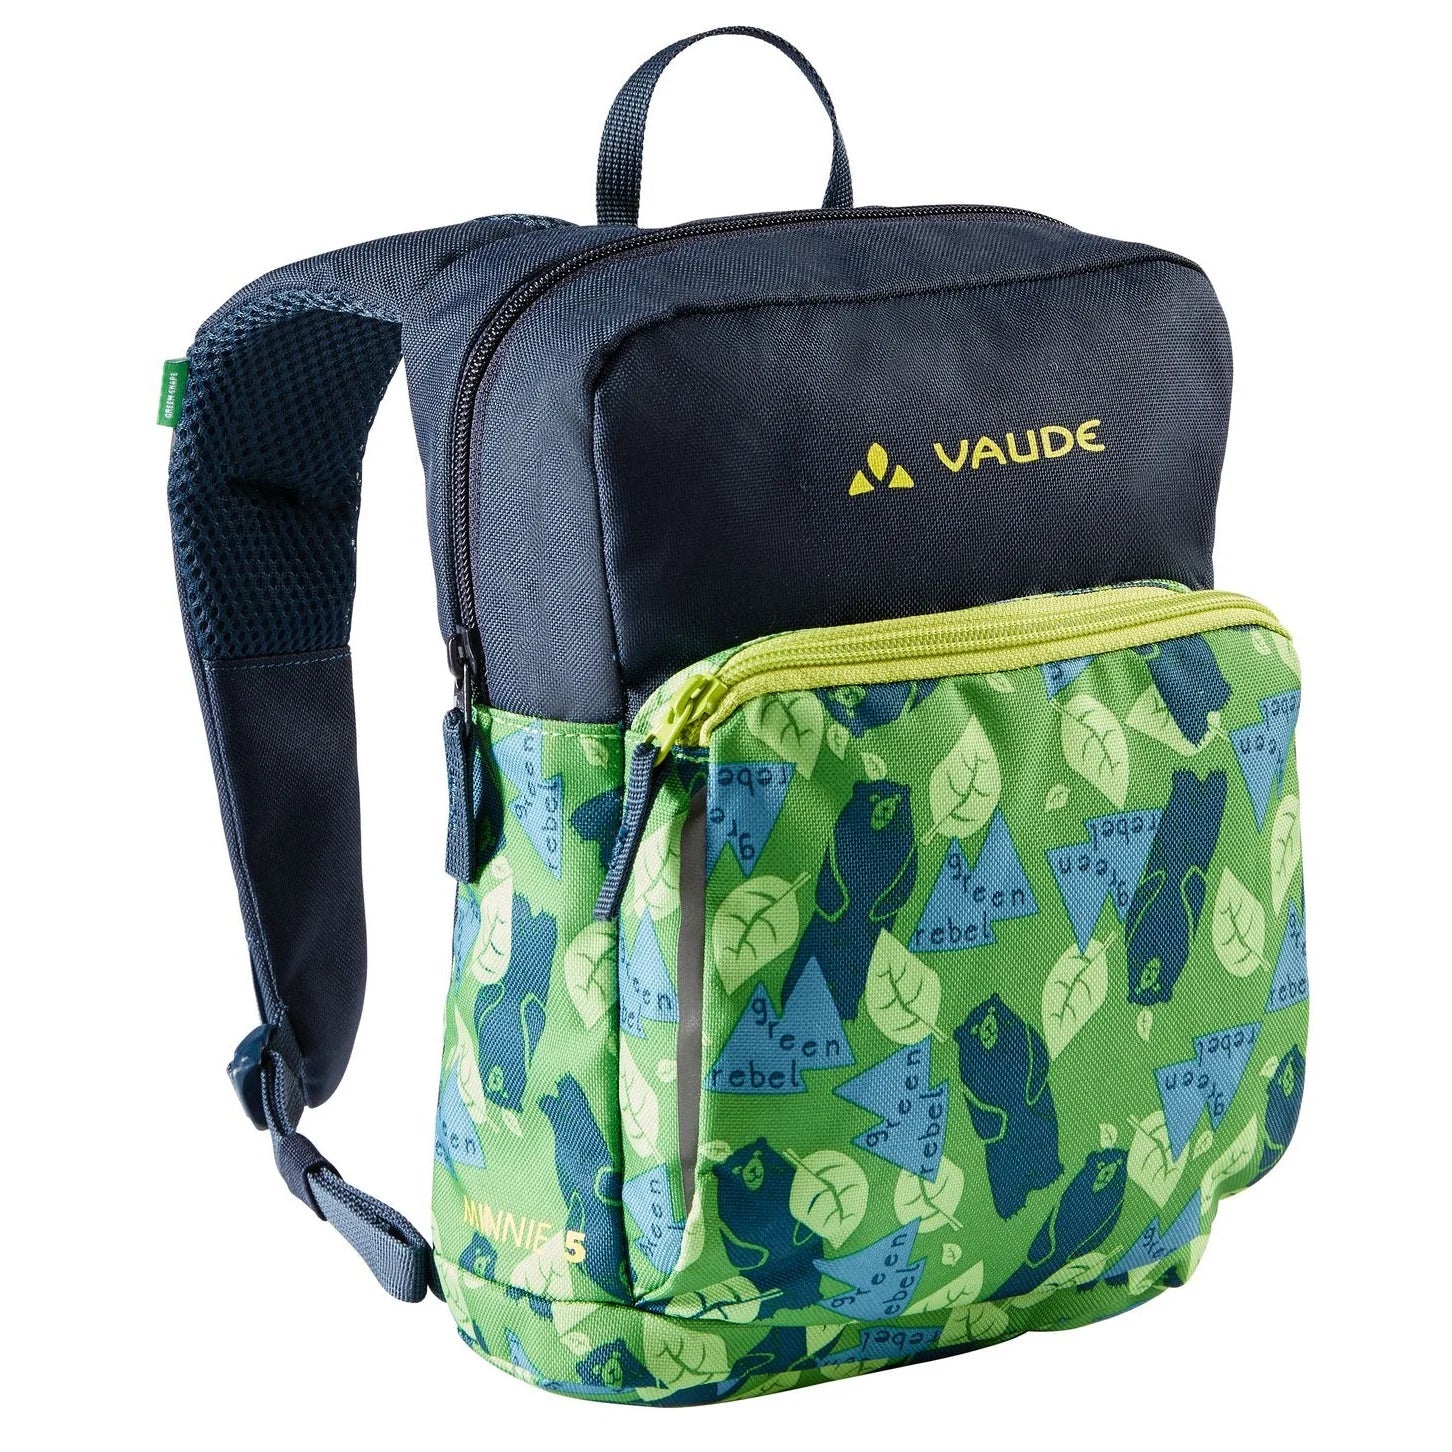 Vaude Family Minnie 5 children's backpack 26 cm - parrot green-eclipse